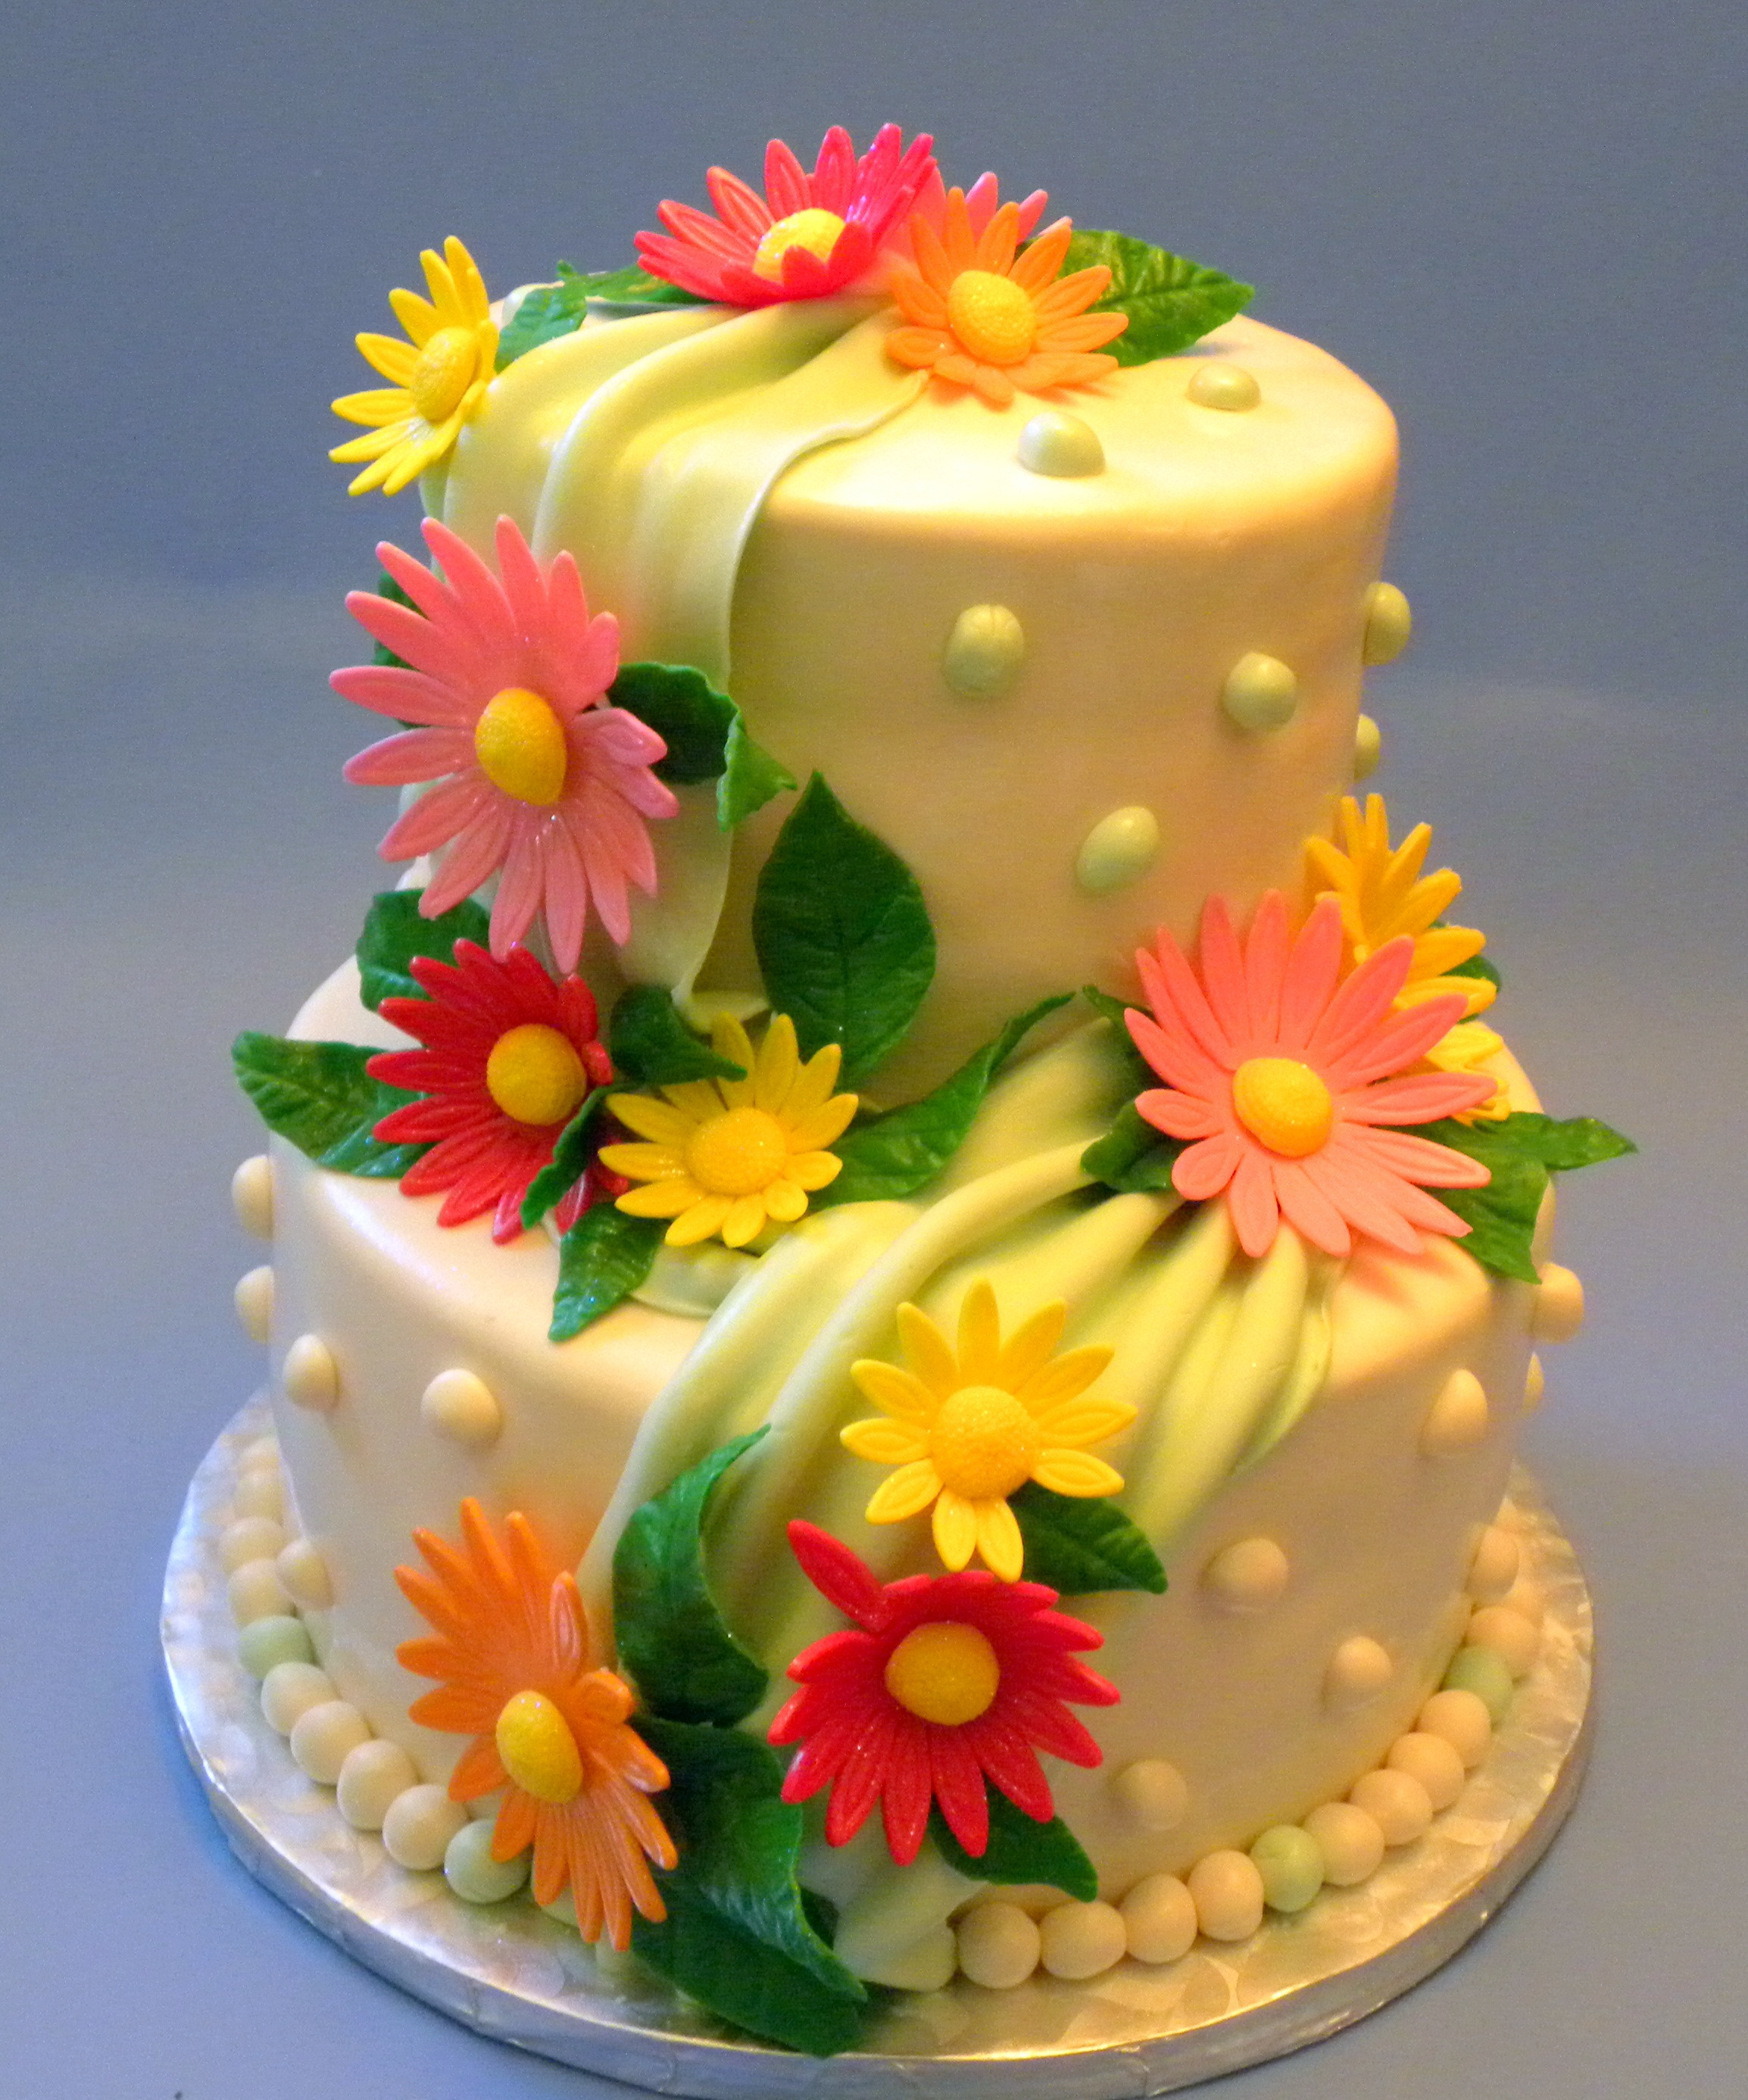 Happy Birthday Flowers And Cake
 Happy birthday flowers and cake